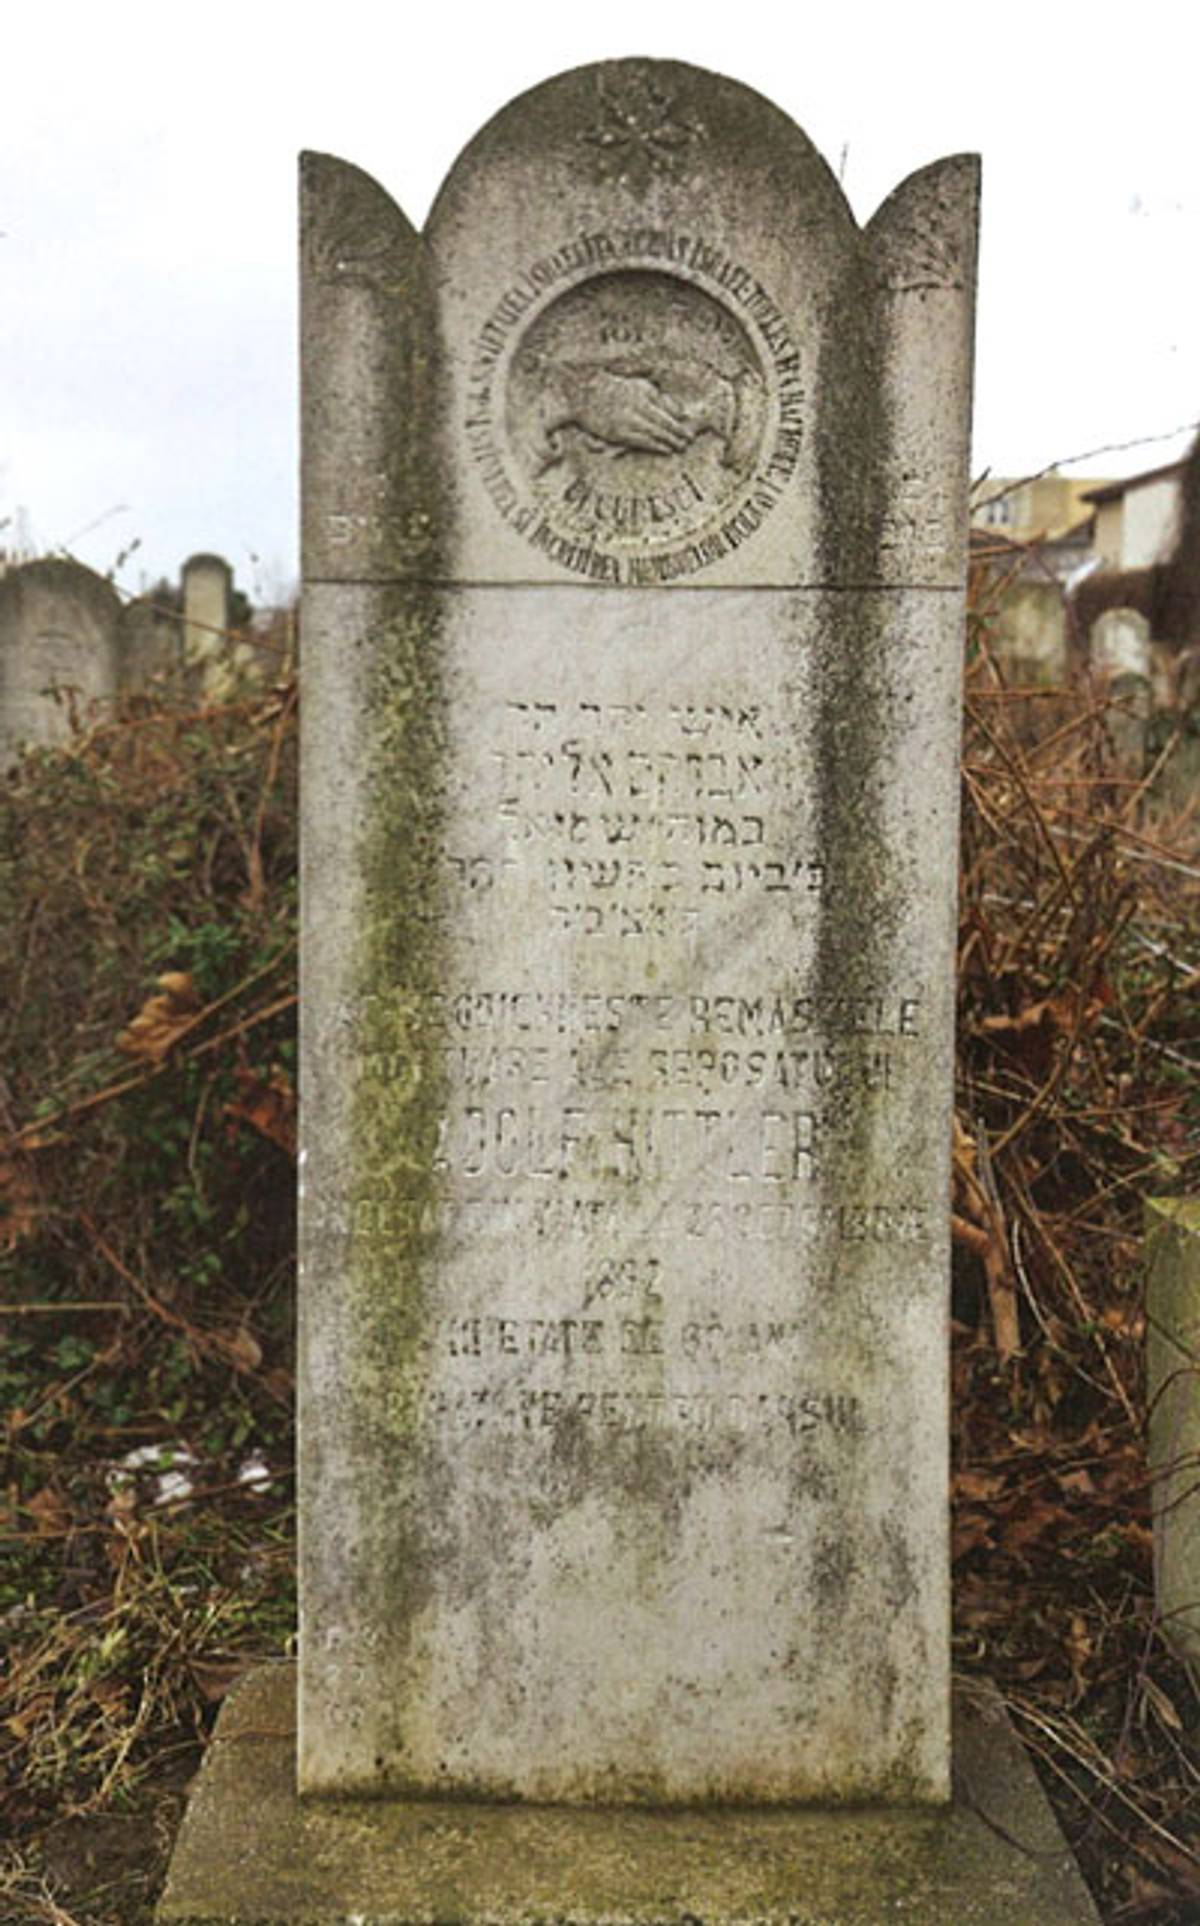 Adolph Hittler’s grave.